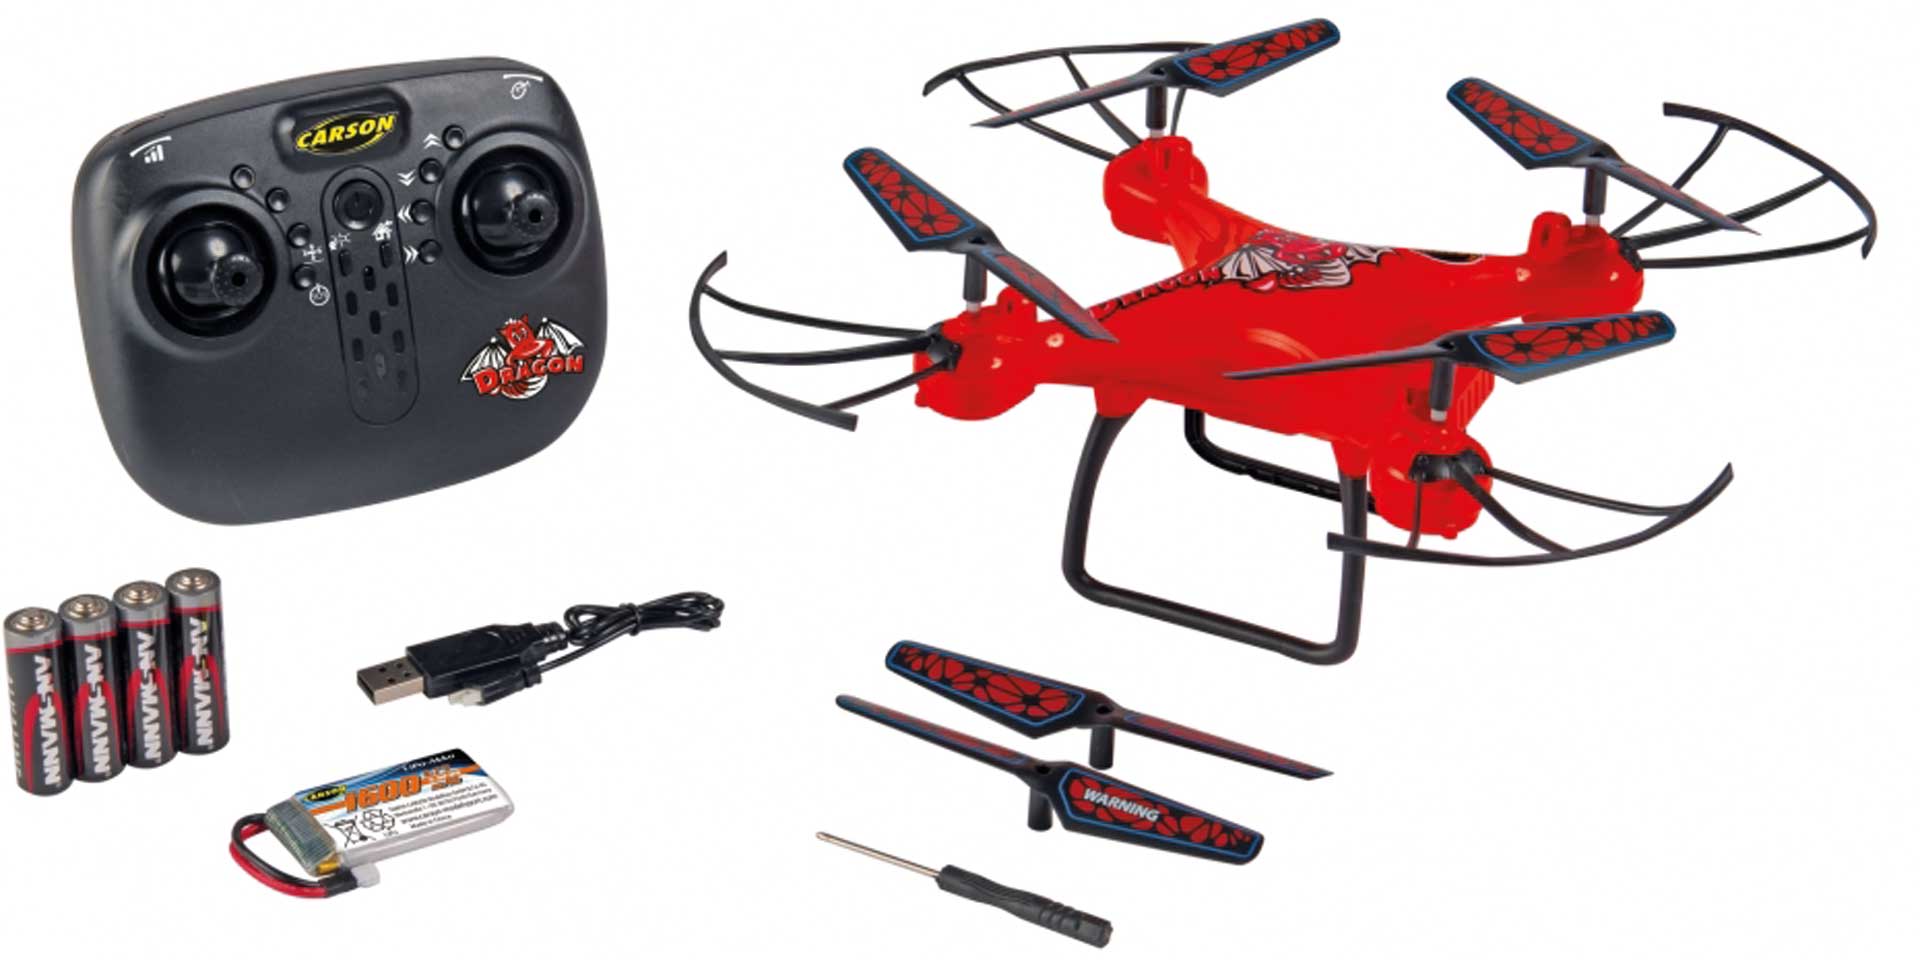 CARSON X4 Quadcopter Dragon 330 2.4G 100% RTF RED